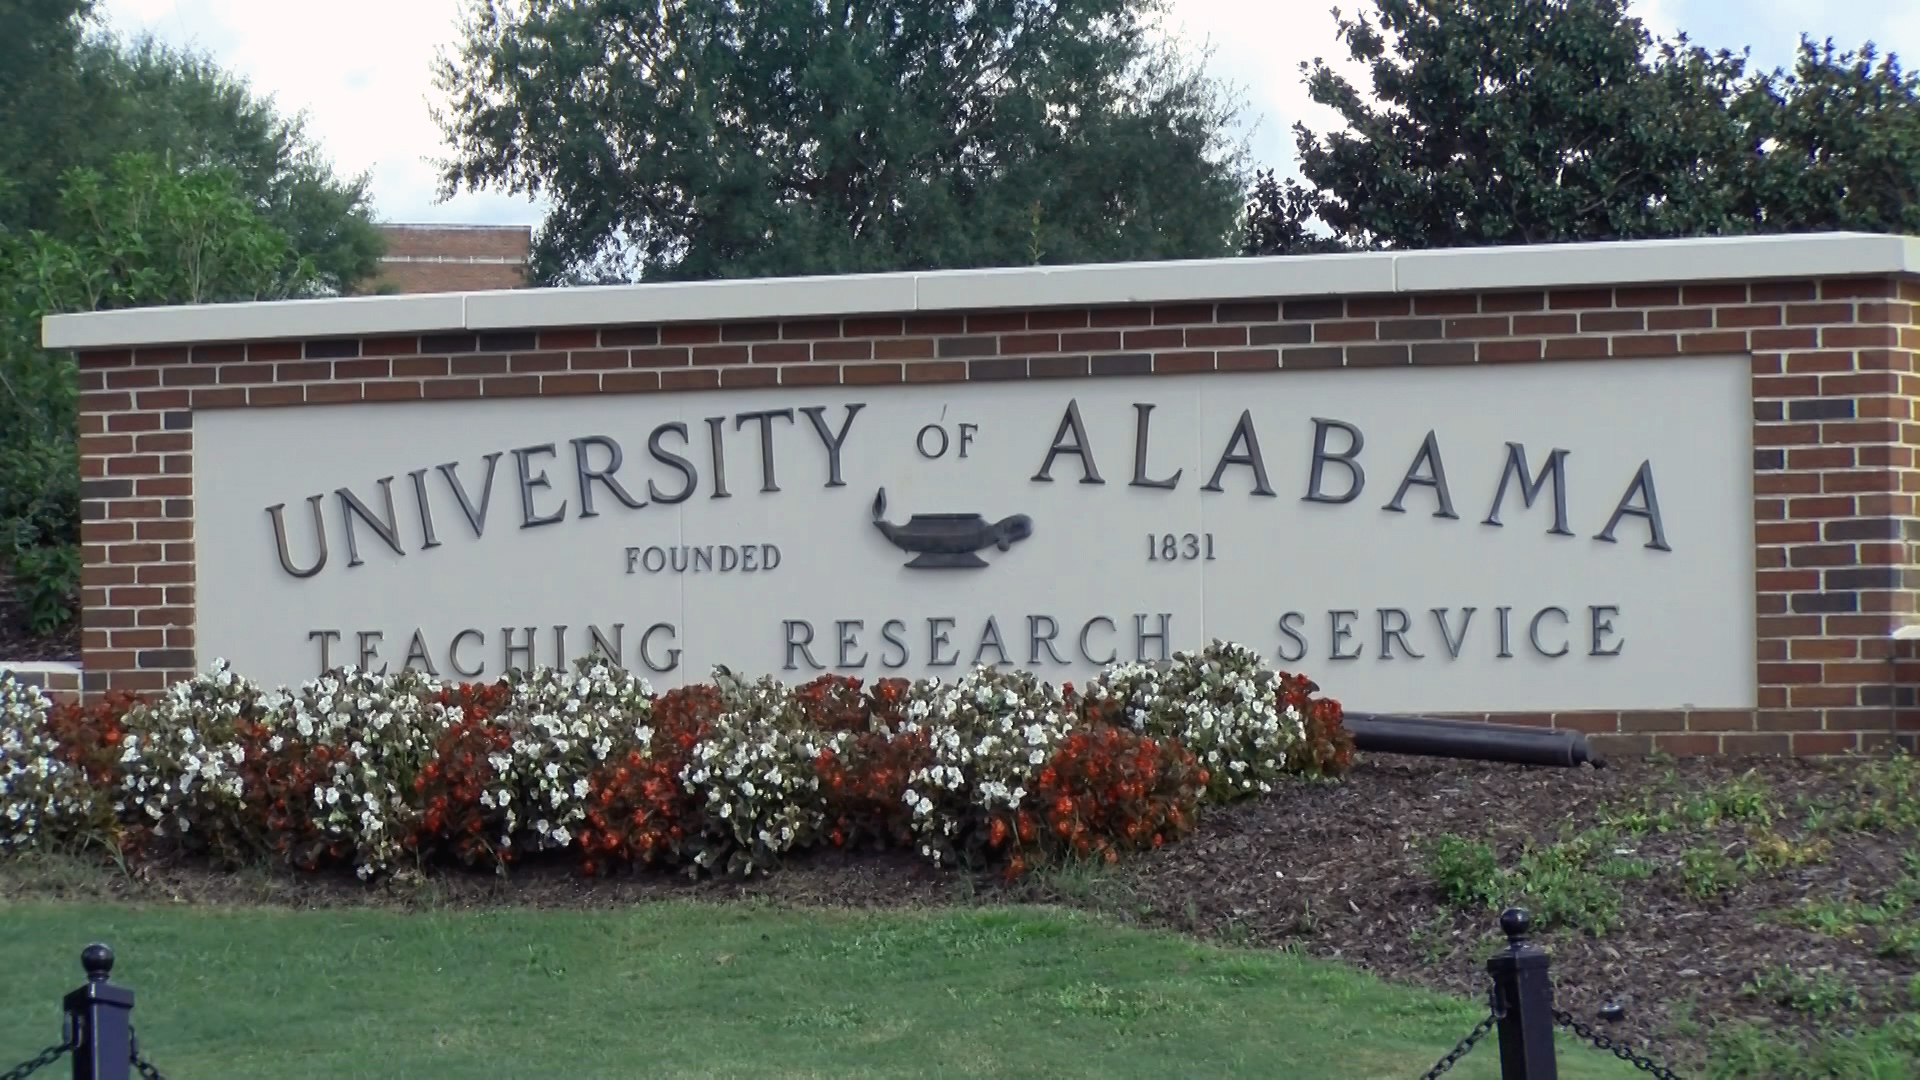 The University of Alabama entrance sign